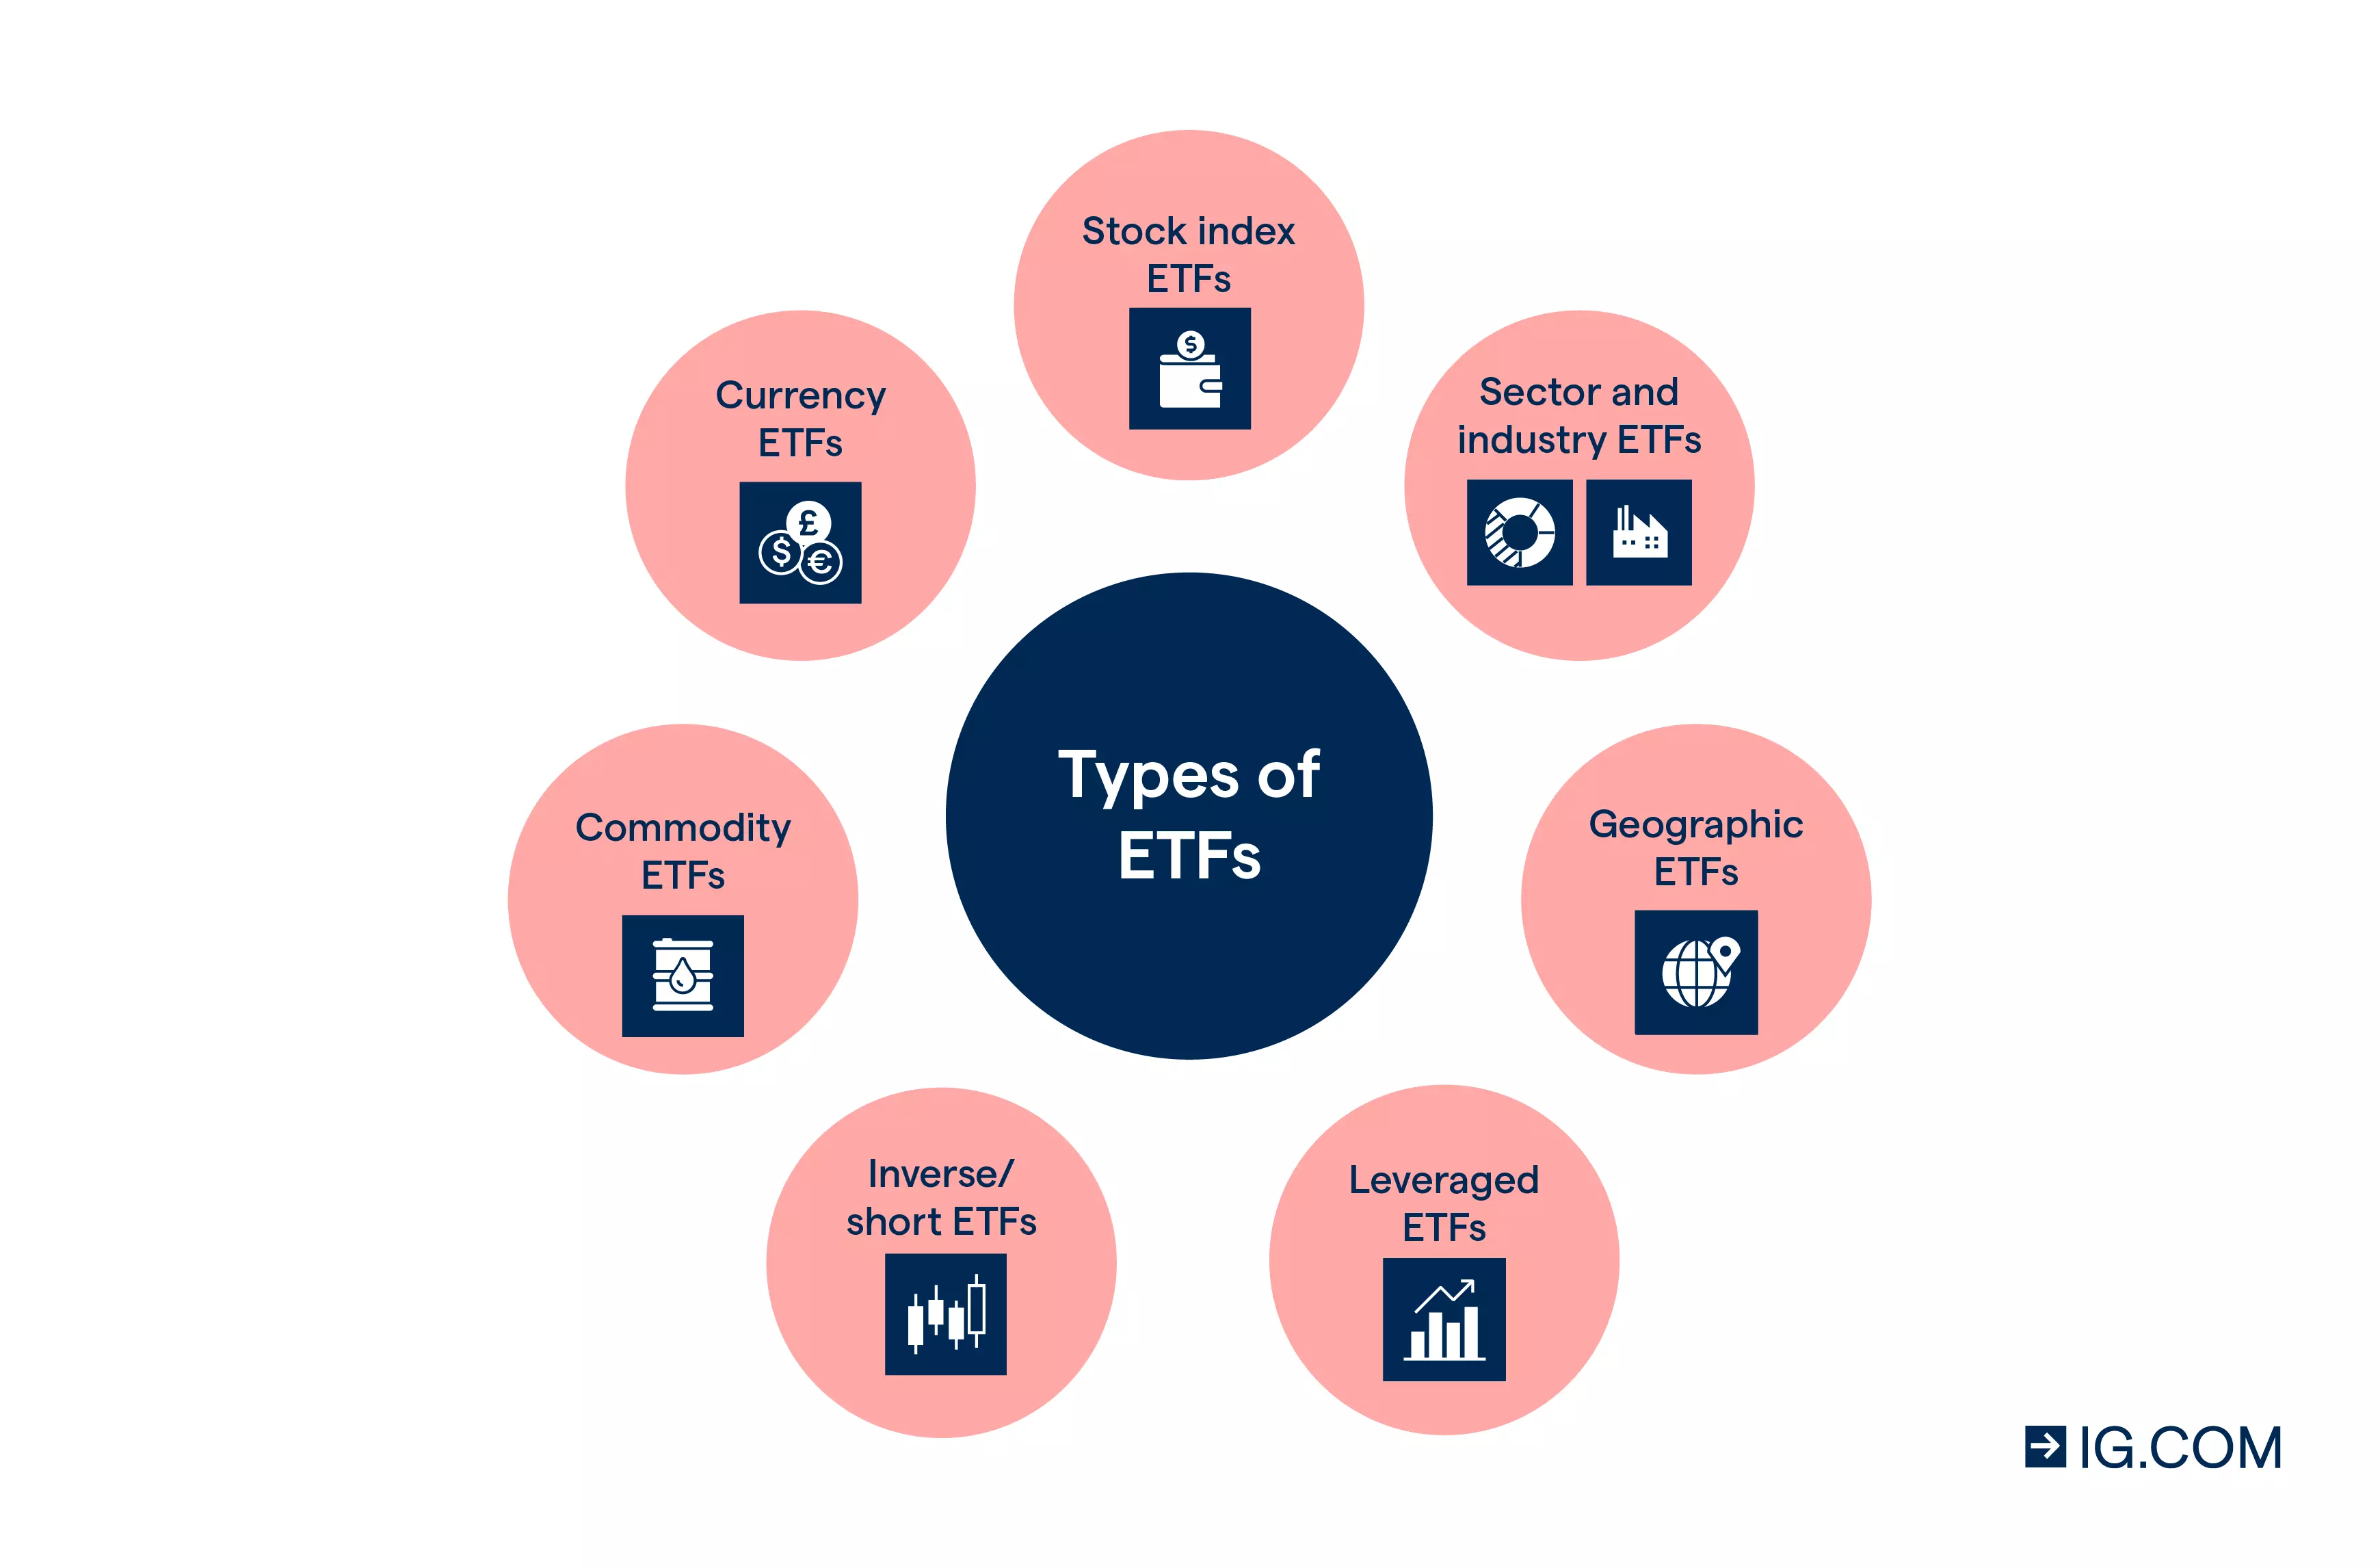 Types of ETF - stock index ETFs, sector and industry ETFs, geographic ETFs, leveraged ETFs, inverse/short ETFs, commodity ETFs, and currency ETFs